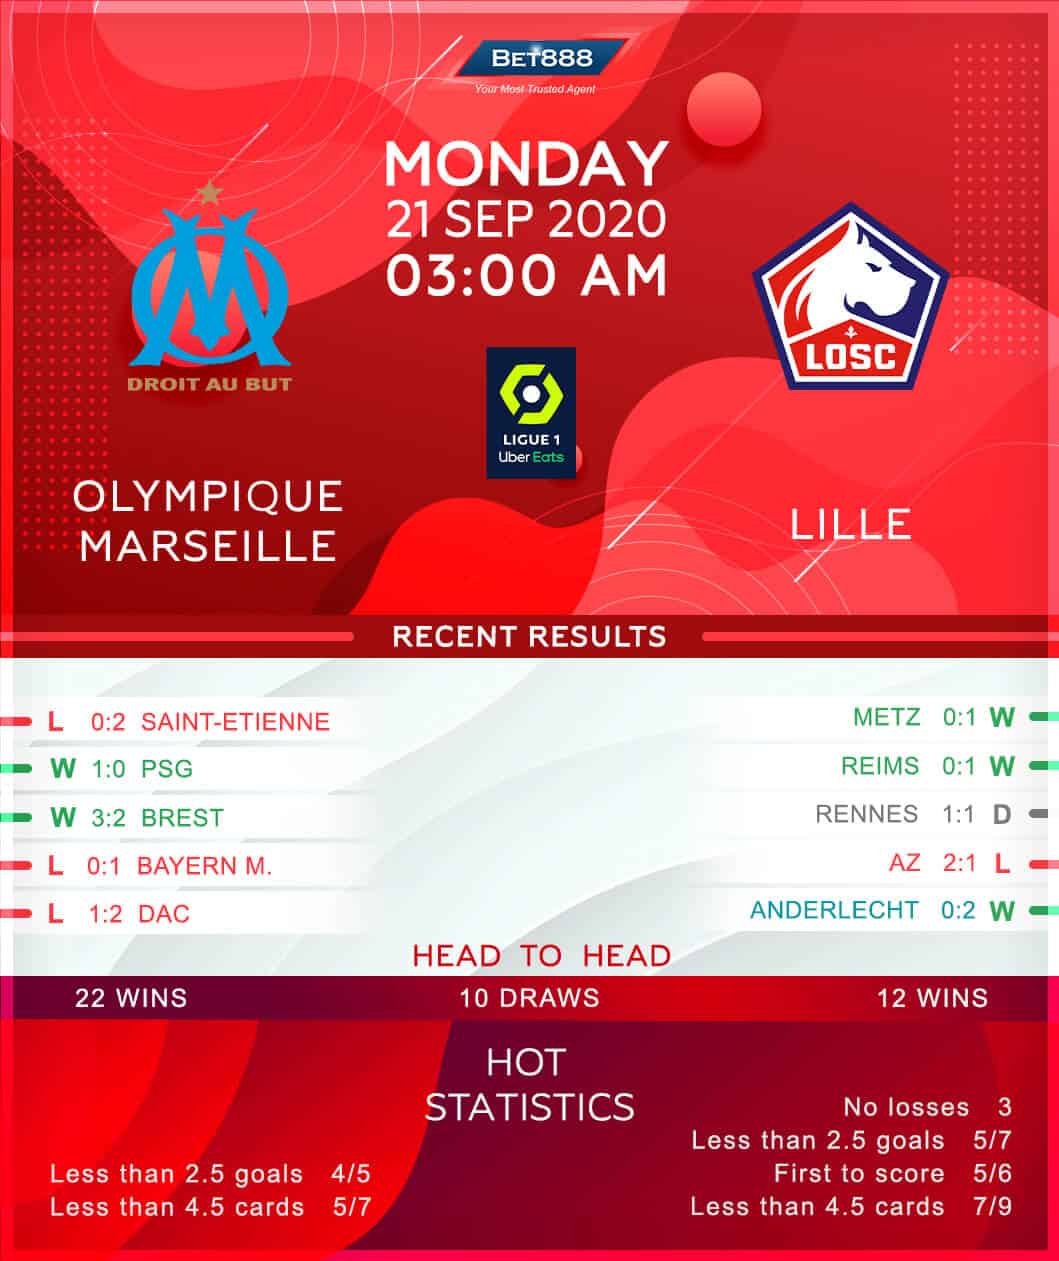 Olympique Marseille vs Lille 21/09/20